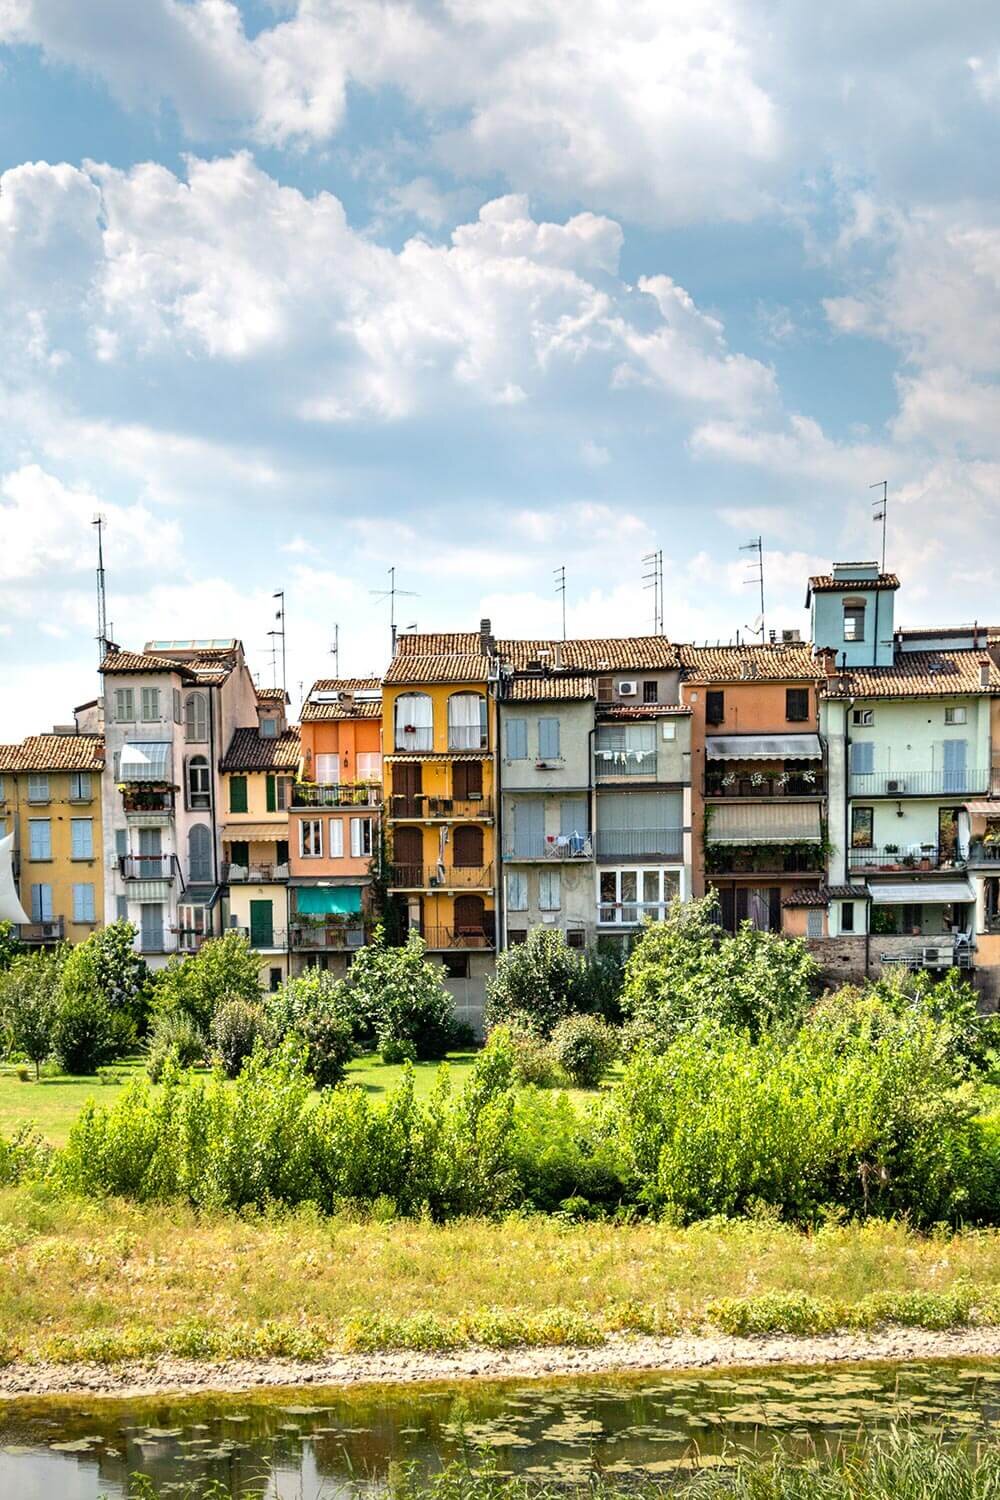 Colorful buildings along the Parma river